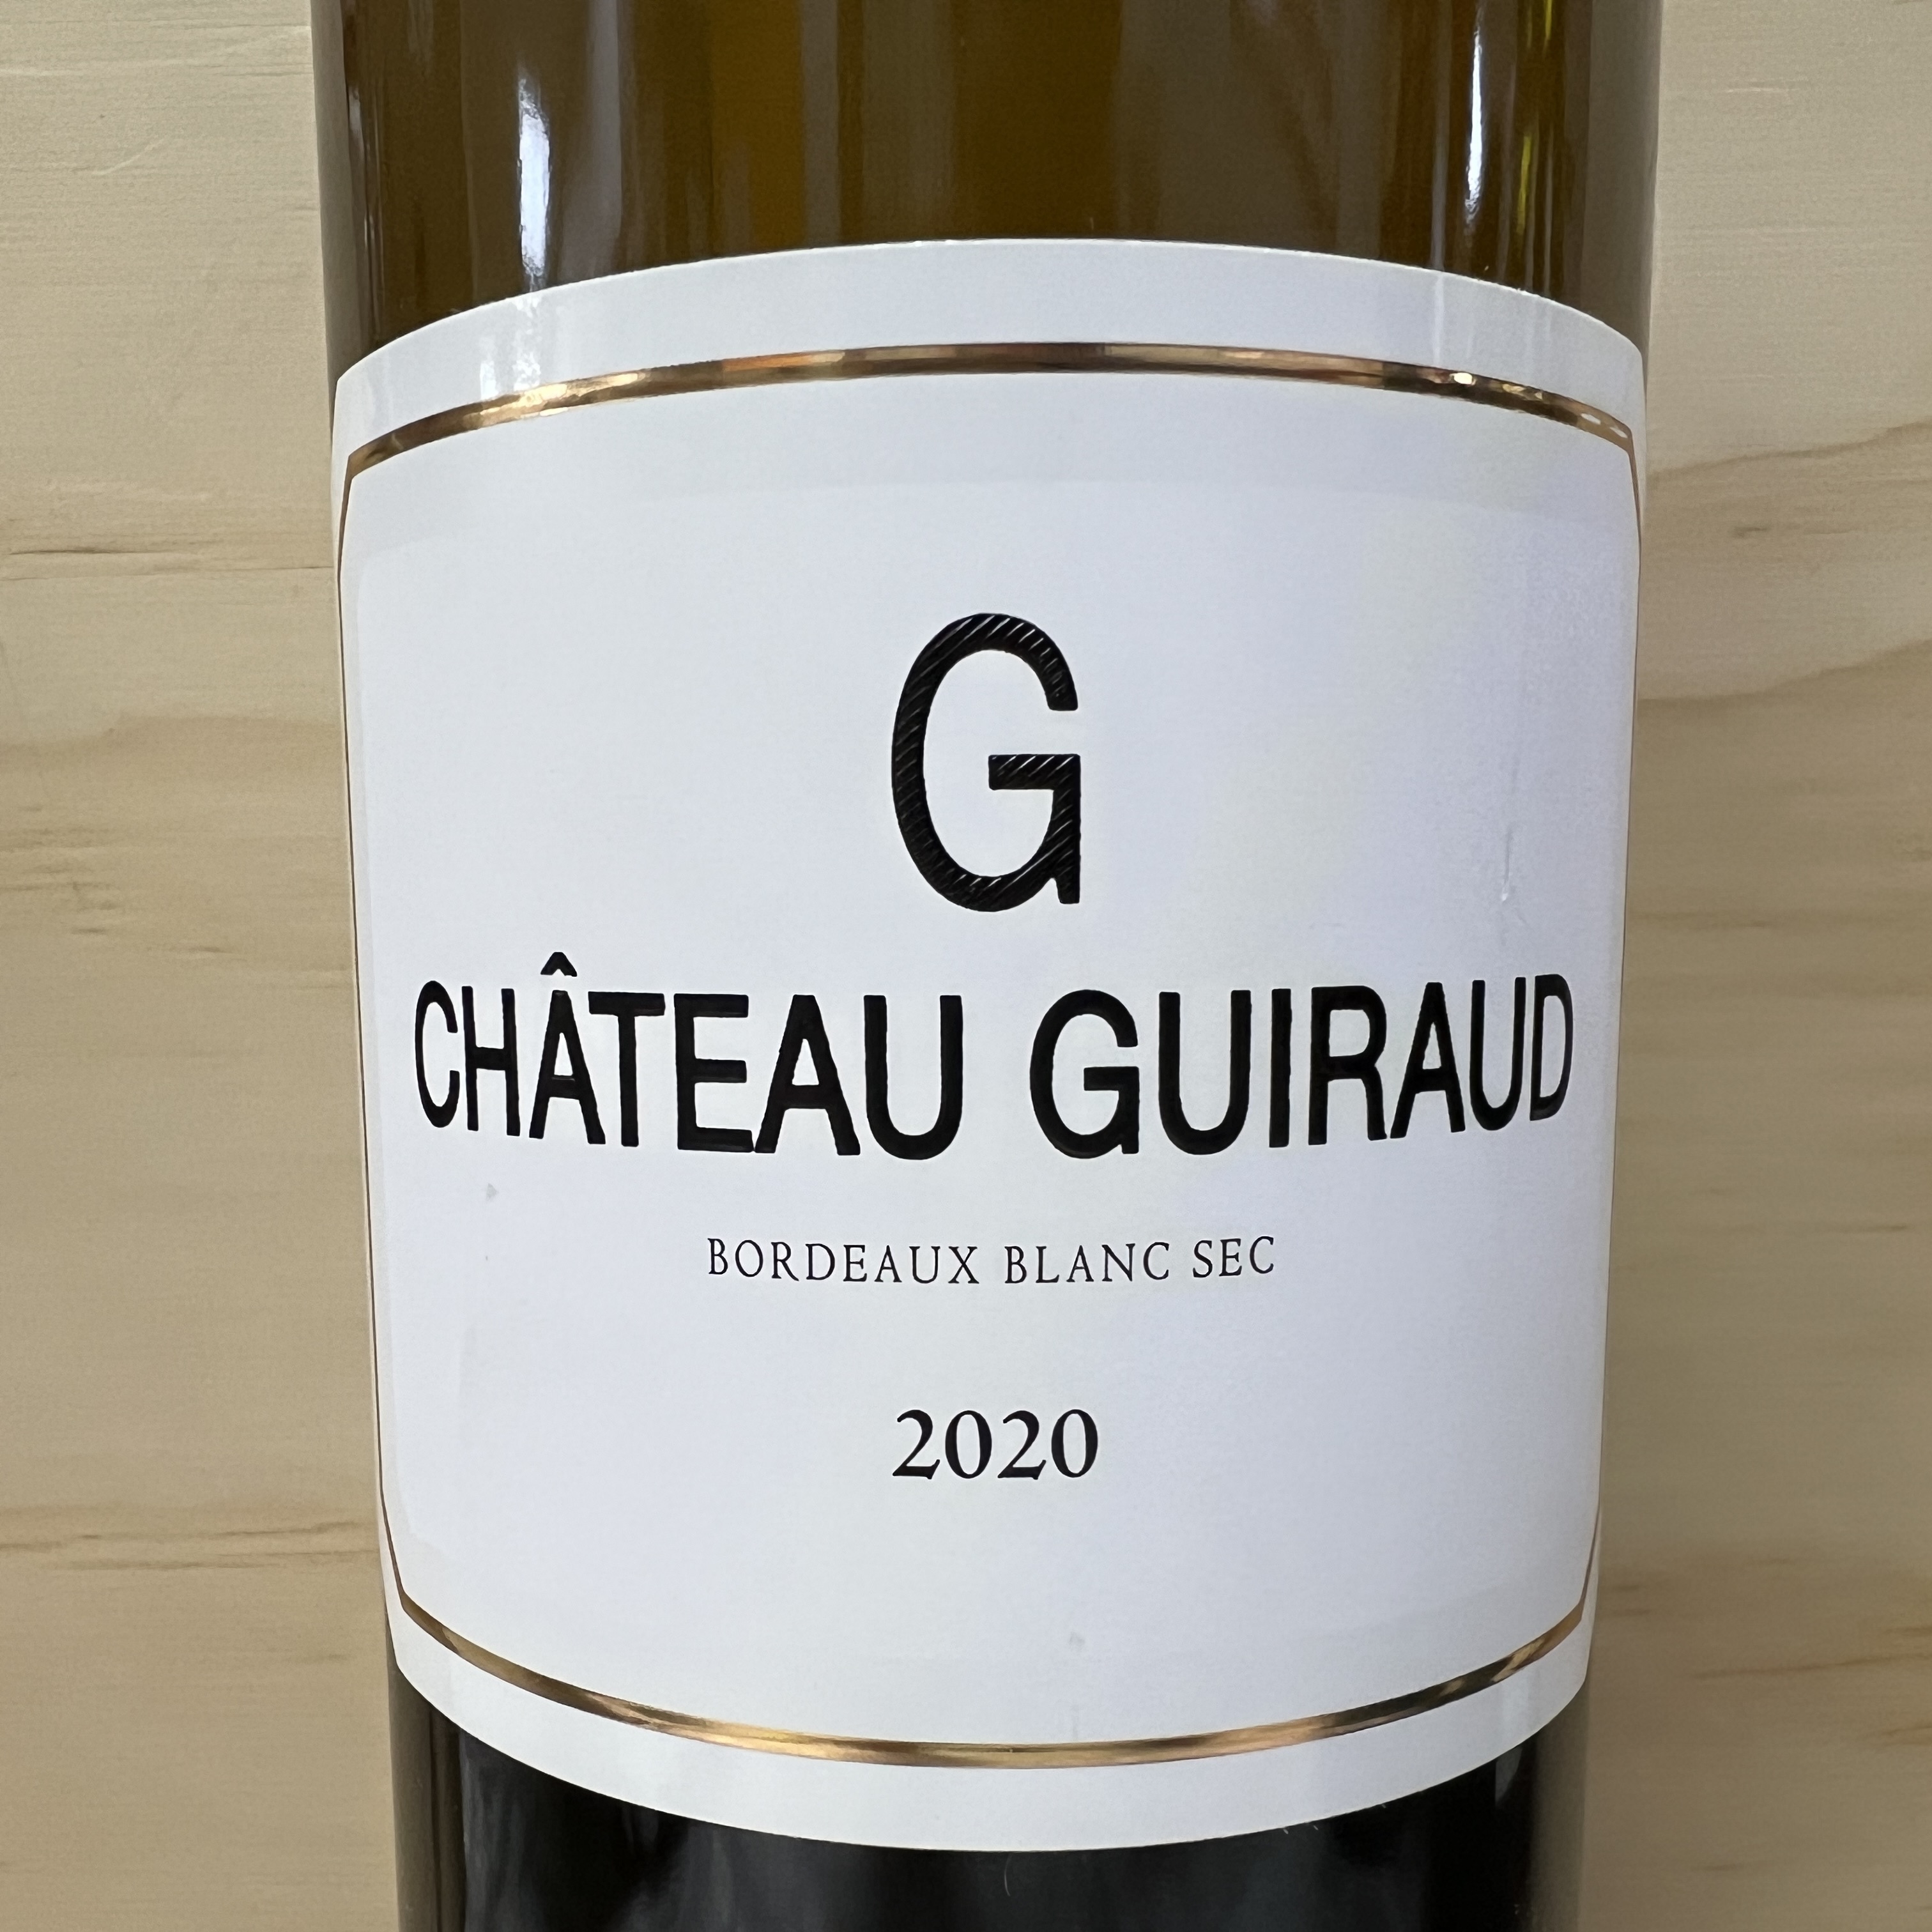 Chateau Guiraud "G" Bordeaux Blanc dry 2020